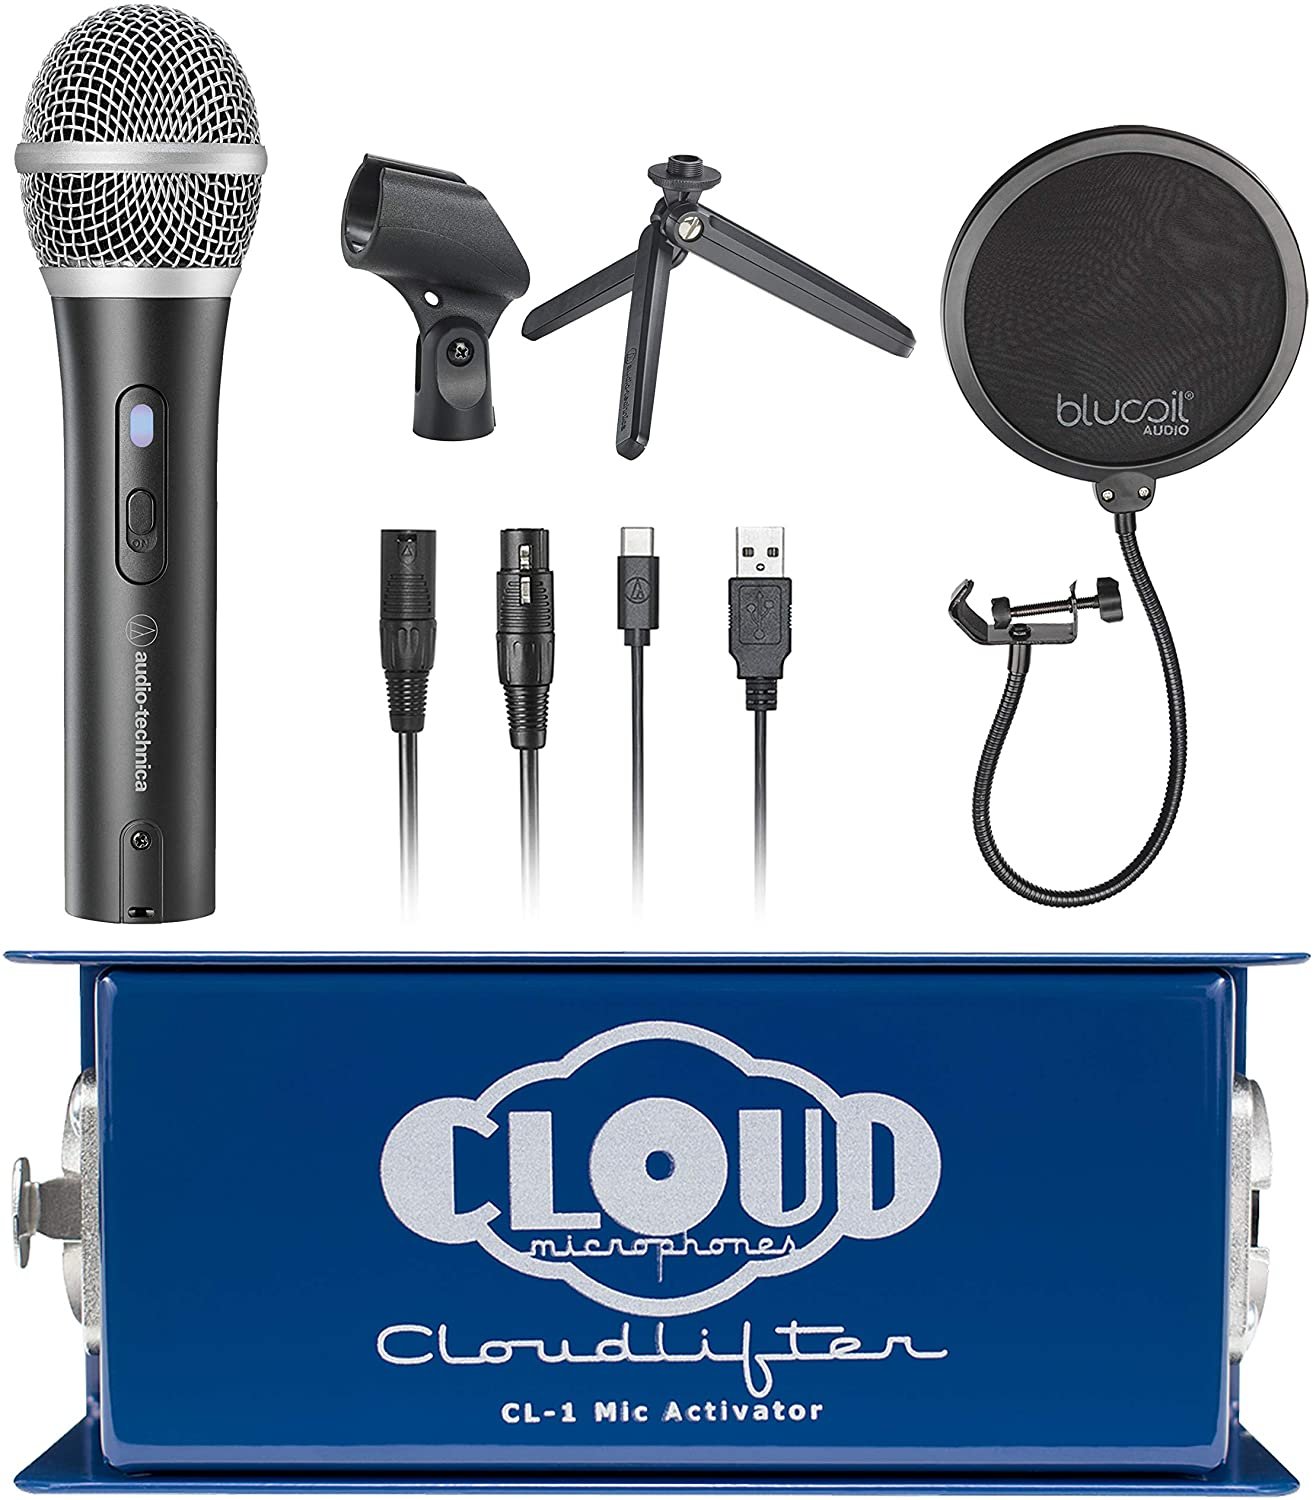 Mic　Activator　ATR2100X-USB　CL-1　Cloud　Pop　Mic　Cloudlifter　Microphones　Filter　with　Blucoil